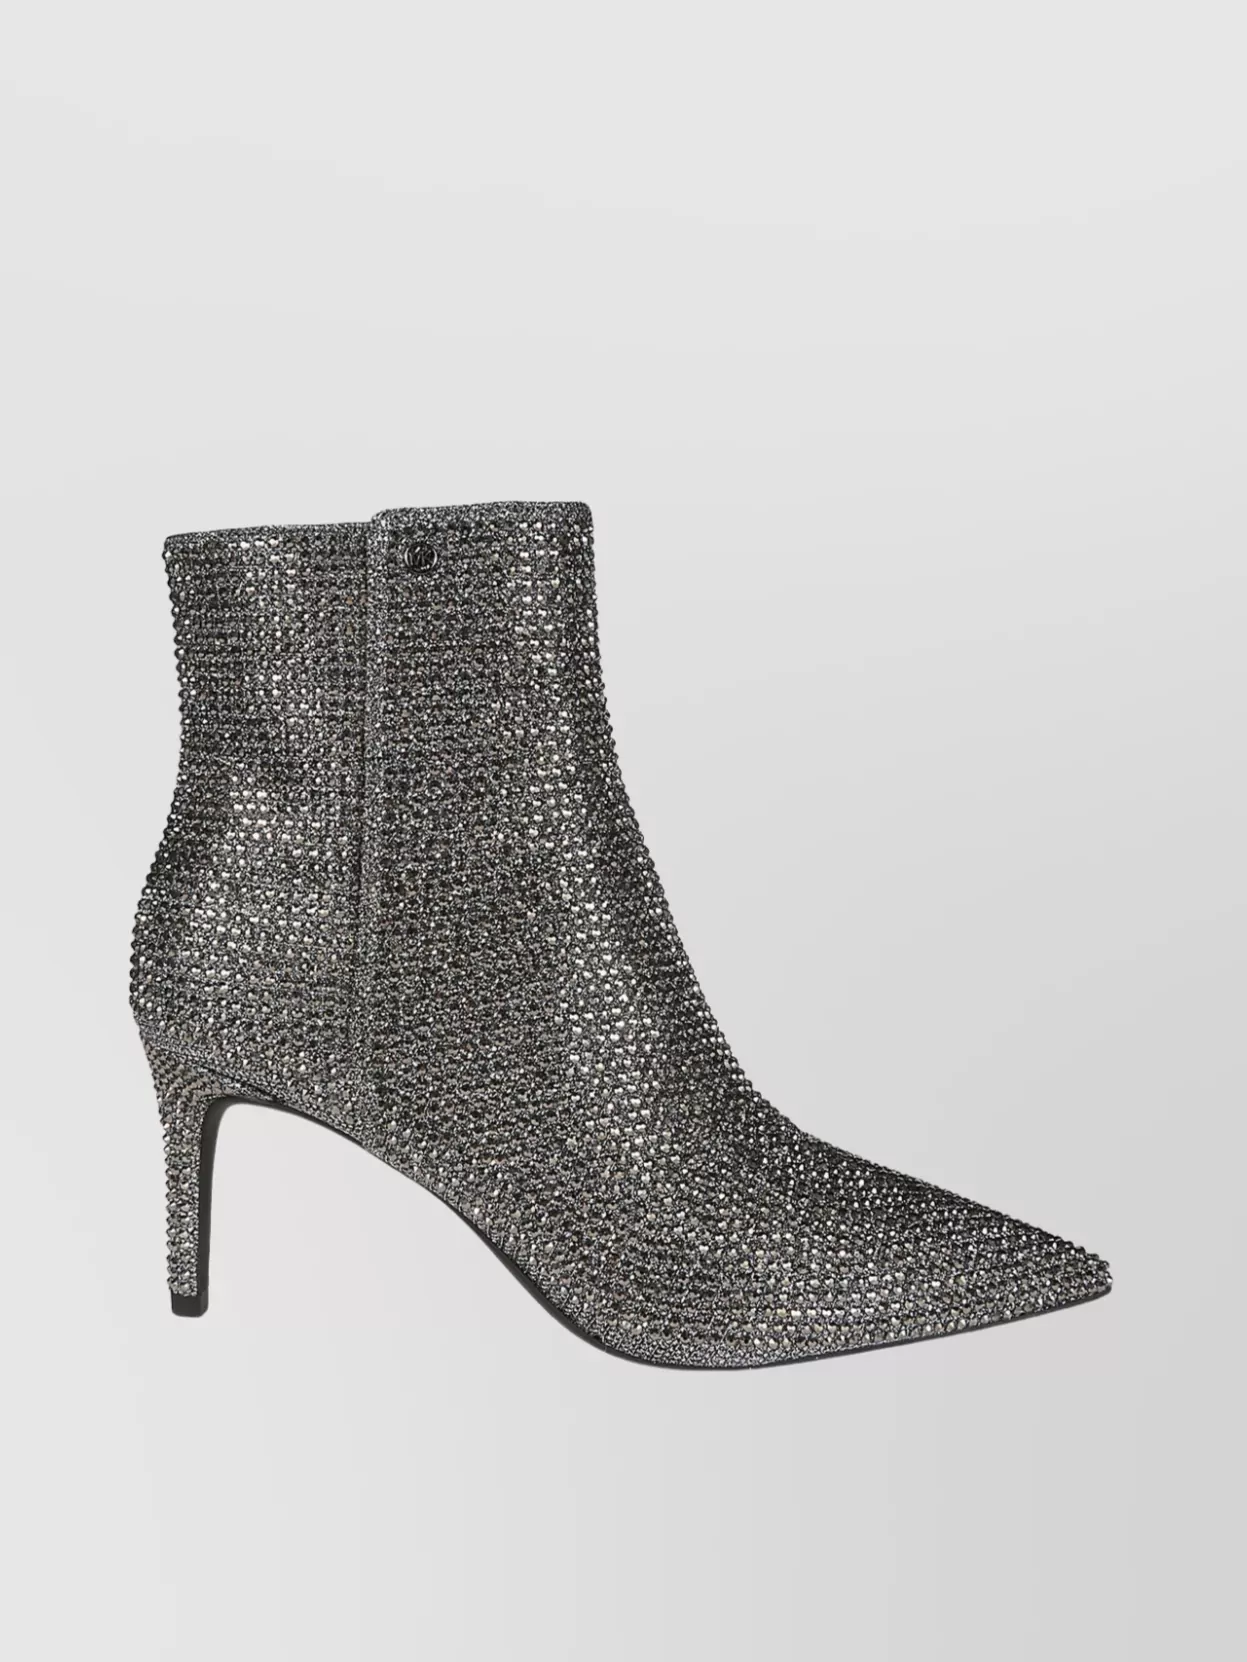 Shop Michael Kors Crystal Embellished Ankle Boots Stiletto